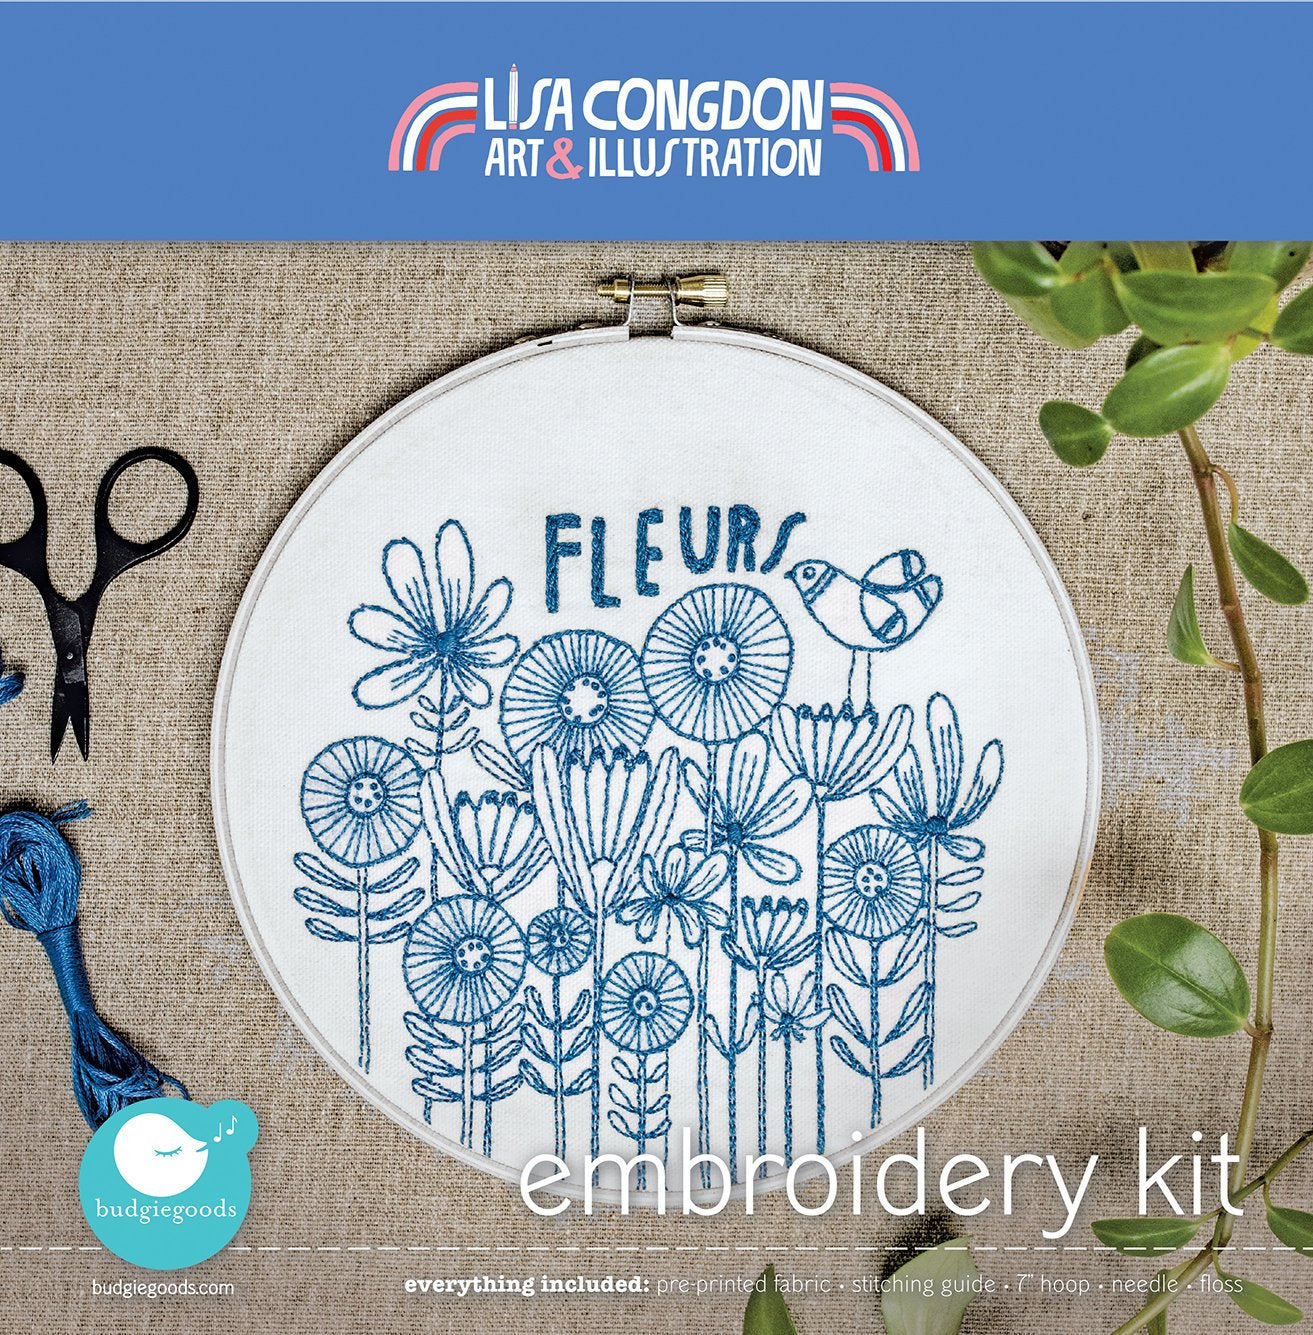 Fleurs embroidery kit